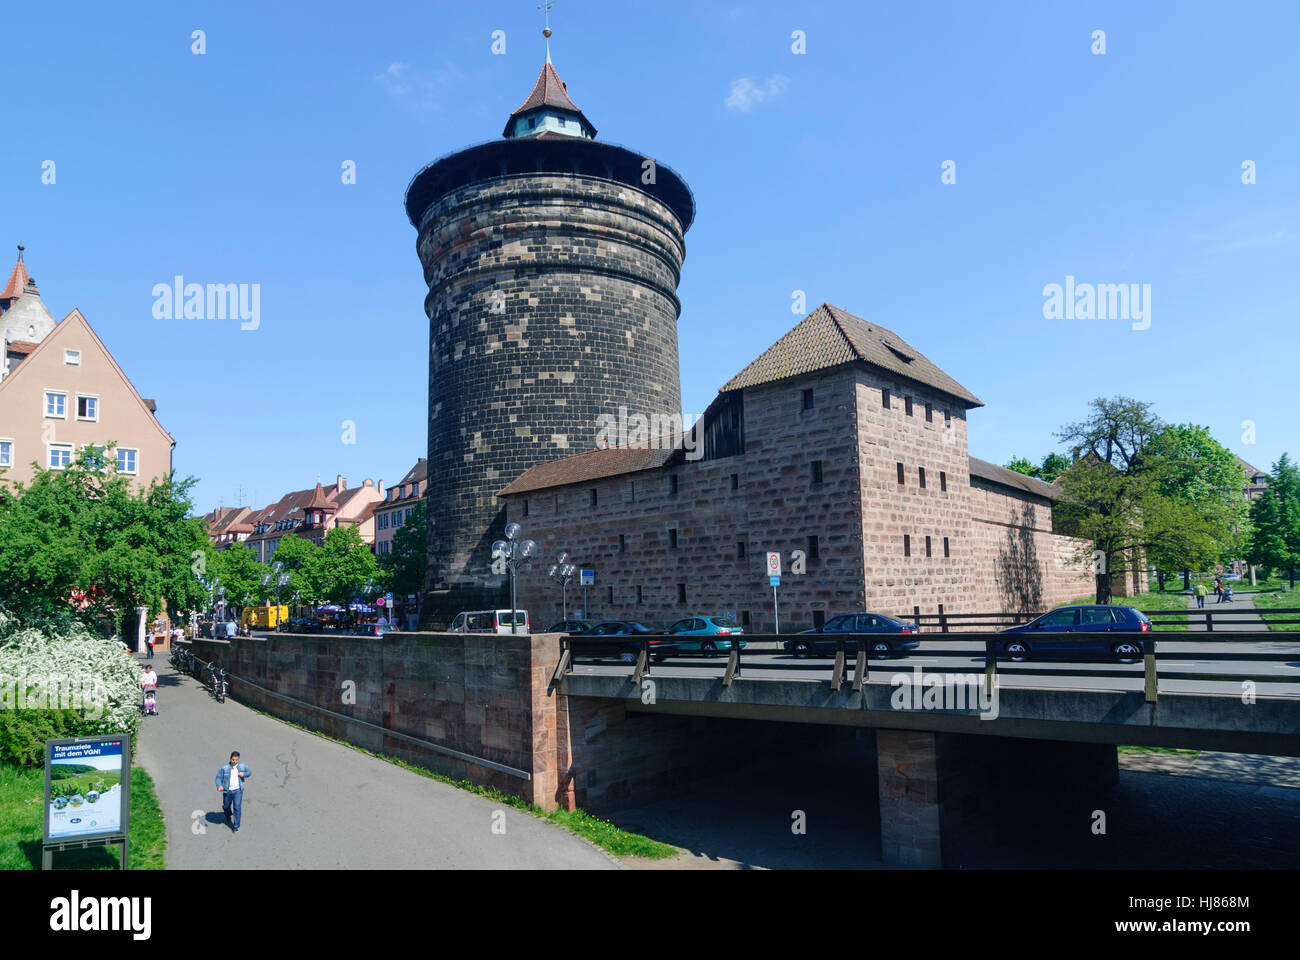 Nürnberg, Nuremberg: Old town; Spittlertor Tower, Mittelfranken, Middle Franconia, Bayern, Bavaria, Germany Stock Photo